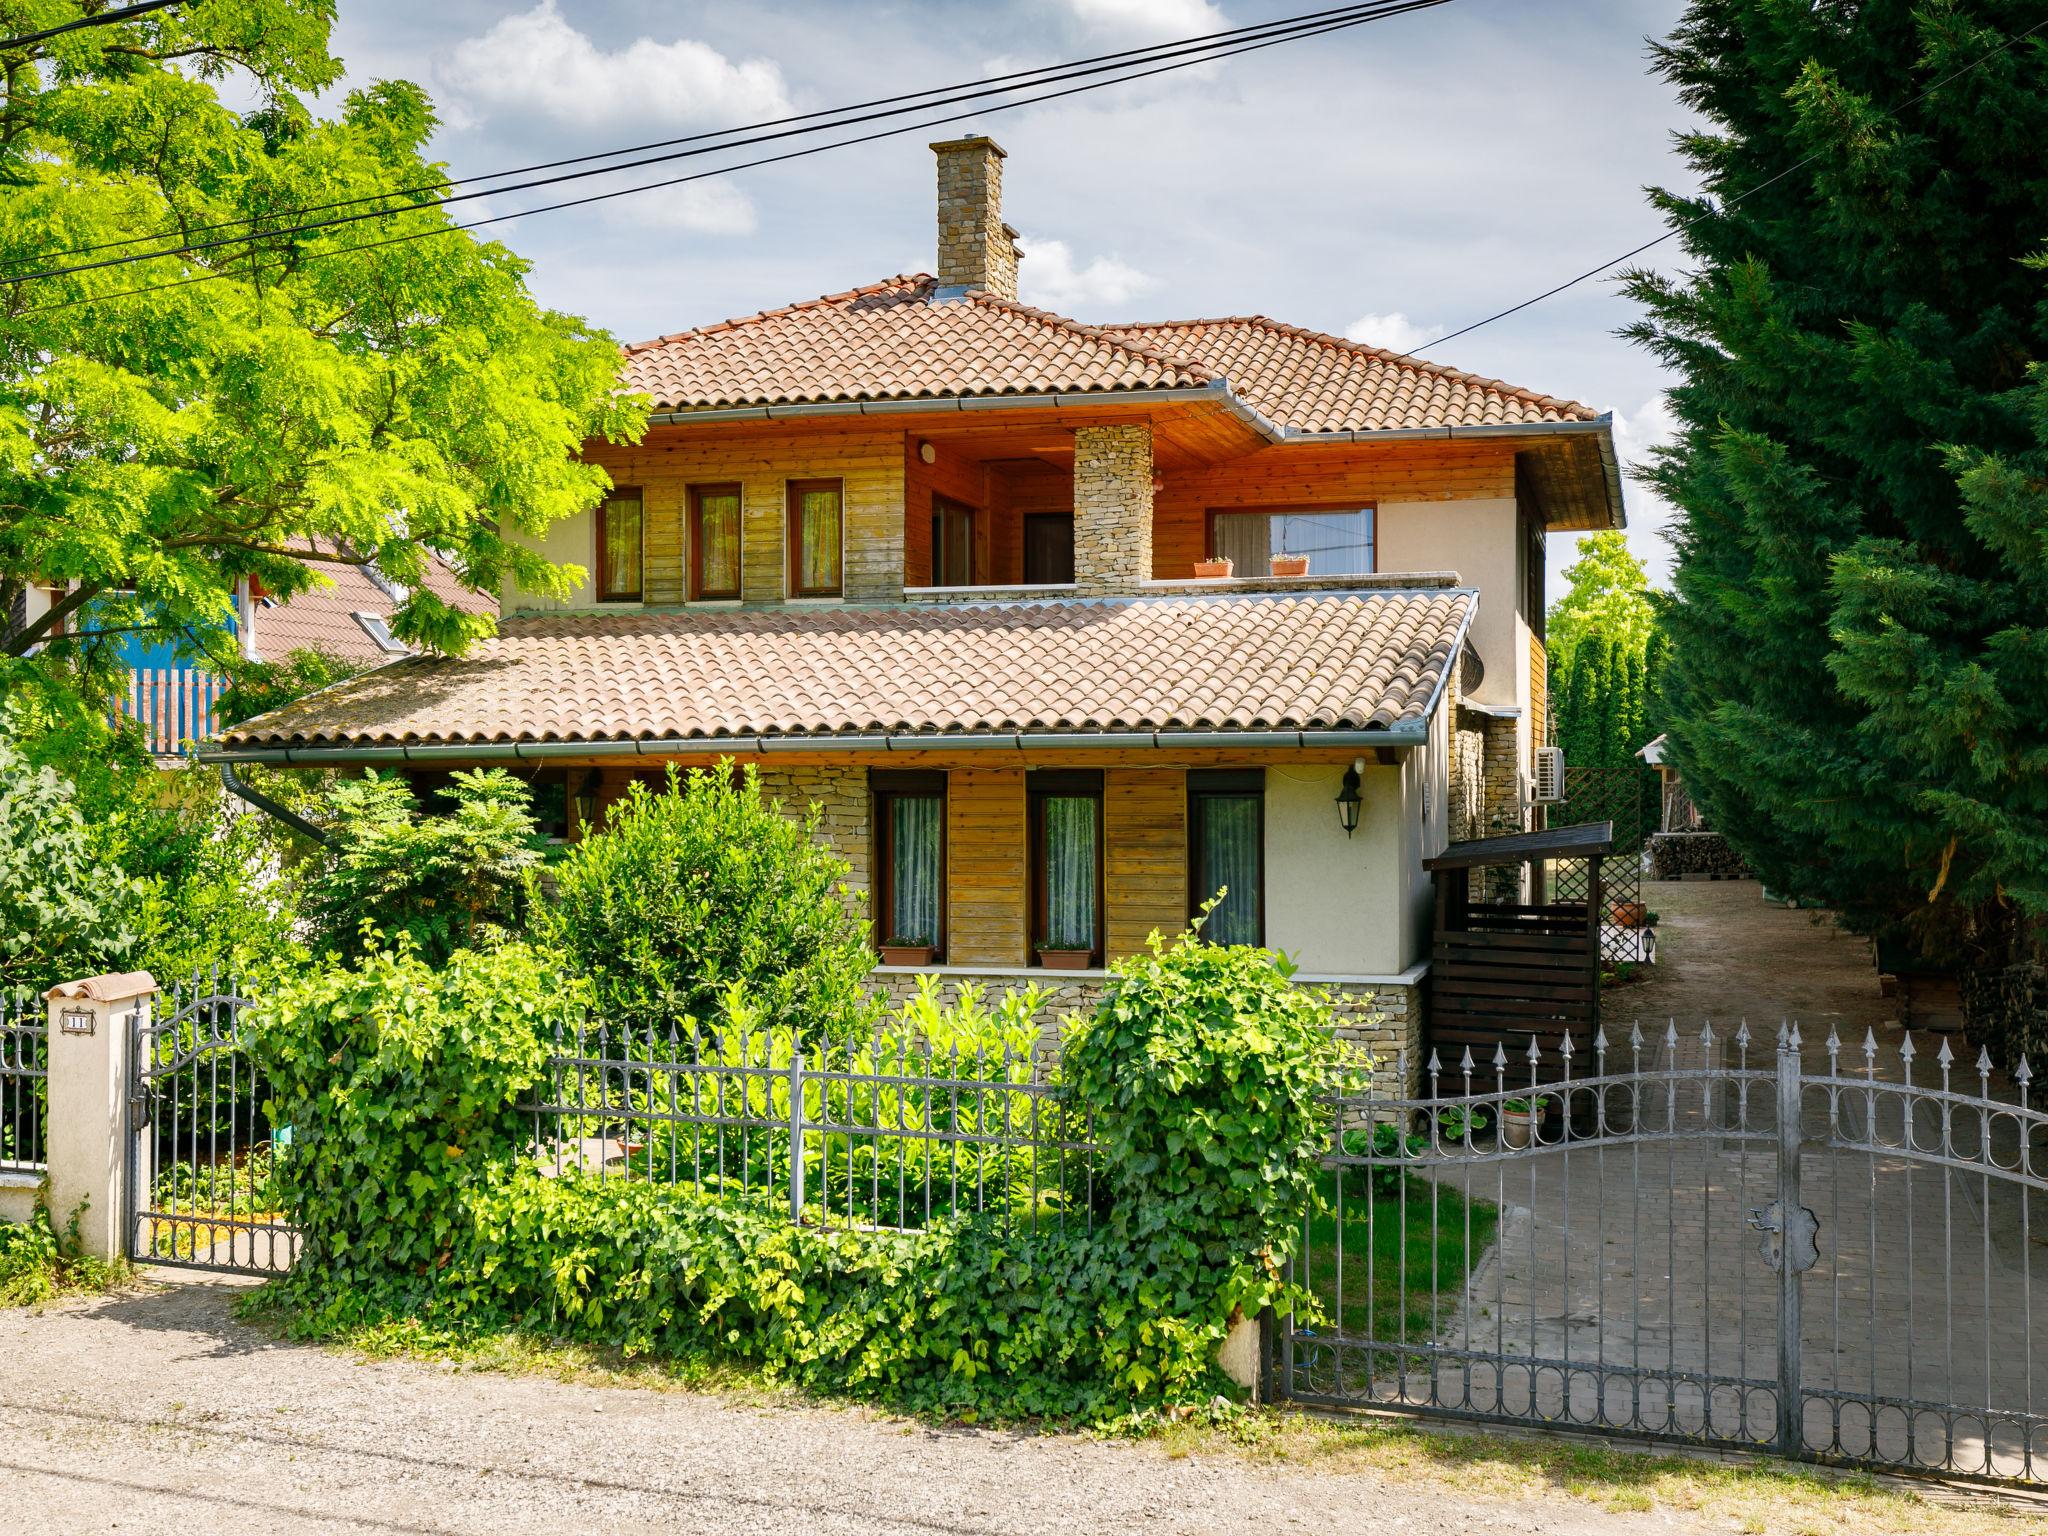 Foto 24 - Casa con 4 camere da letto a Balatonőszöd con giardino e vista sulle montagne